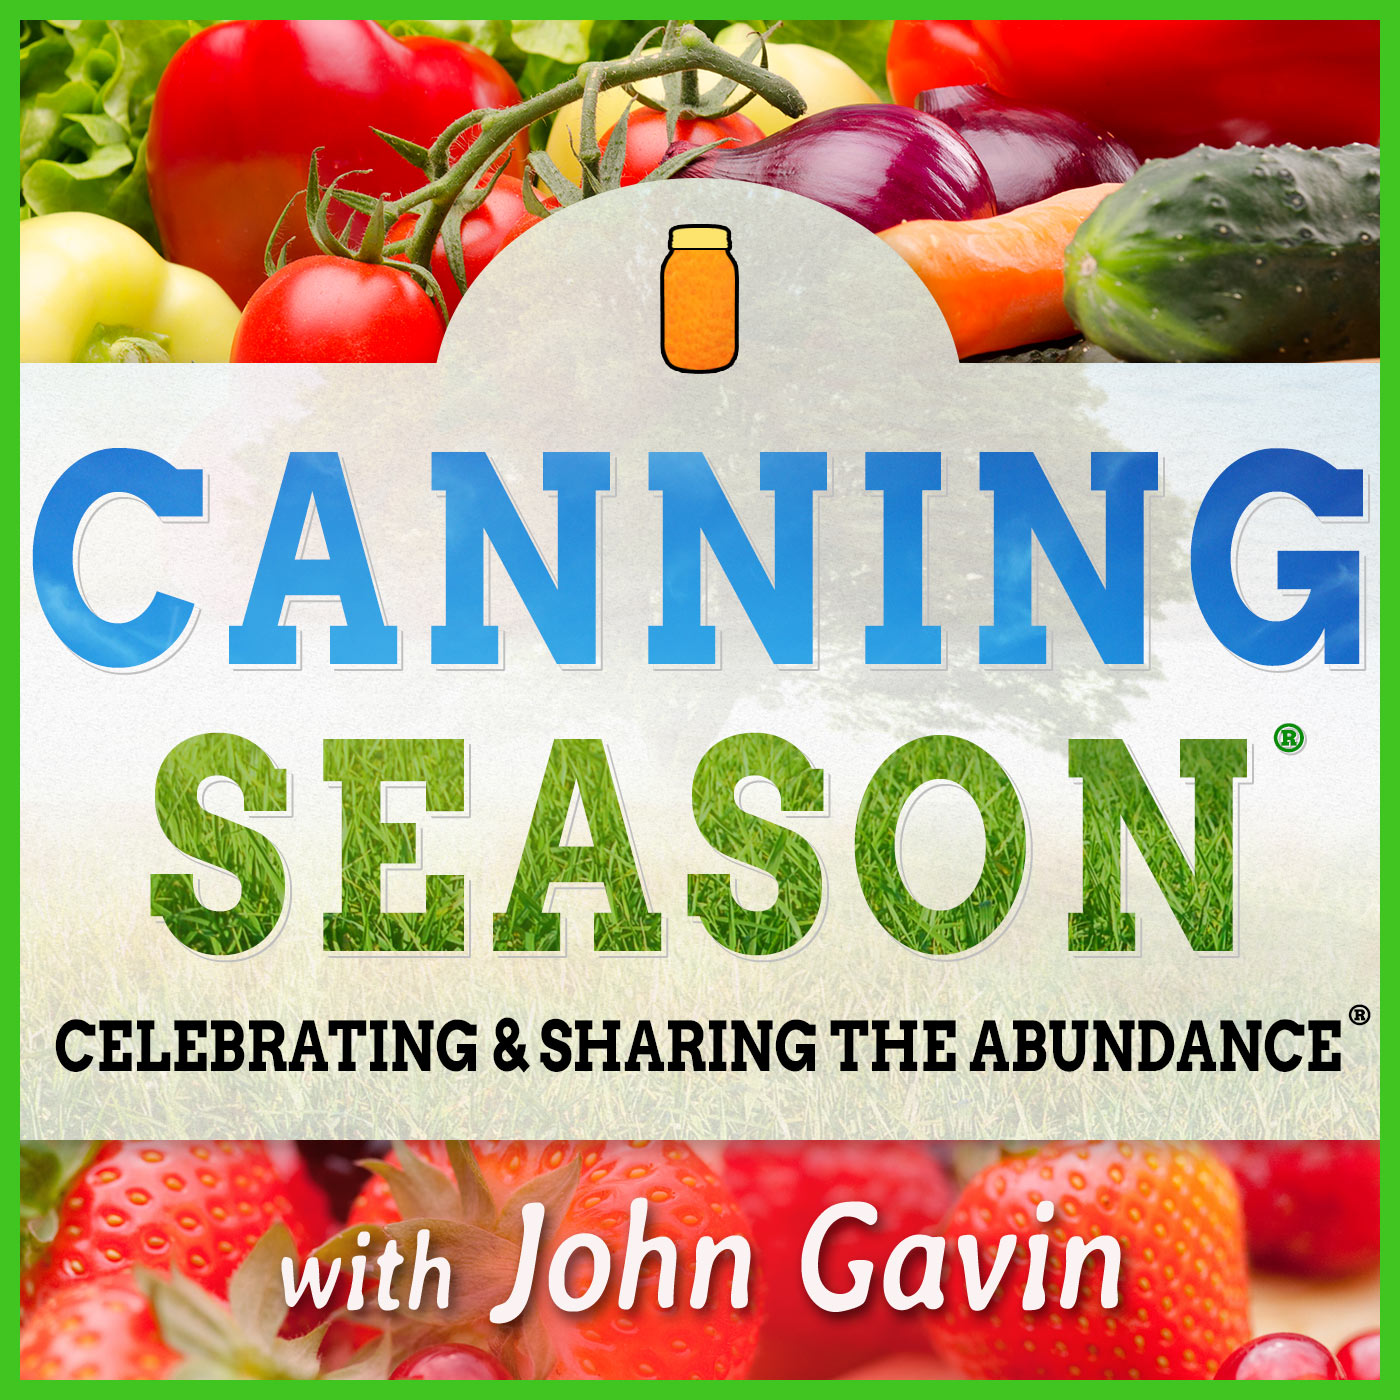 CS-039 Canning Season is Back!